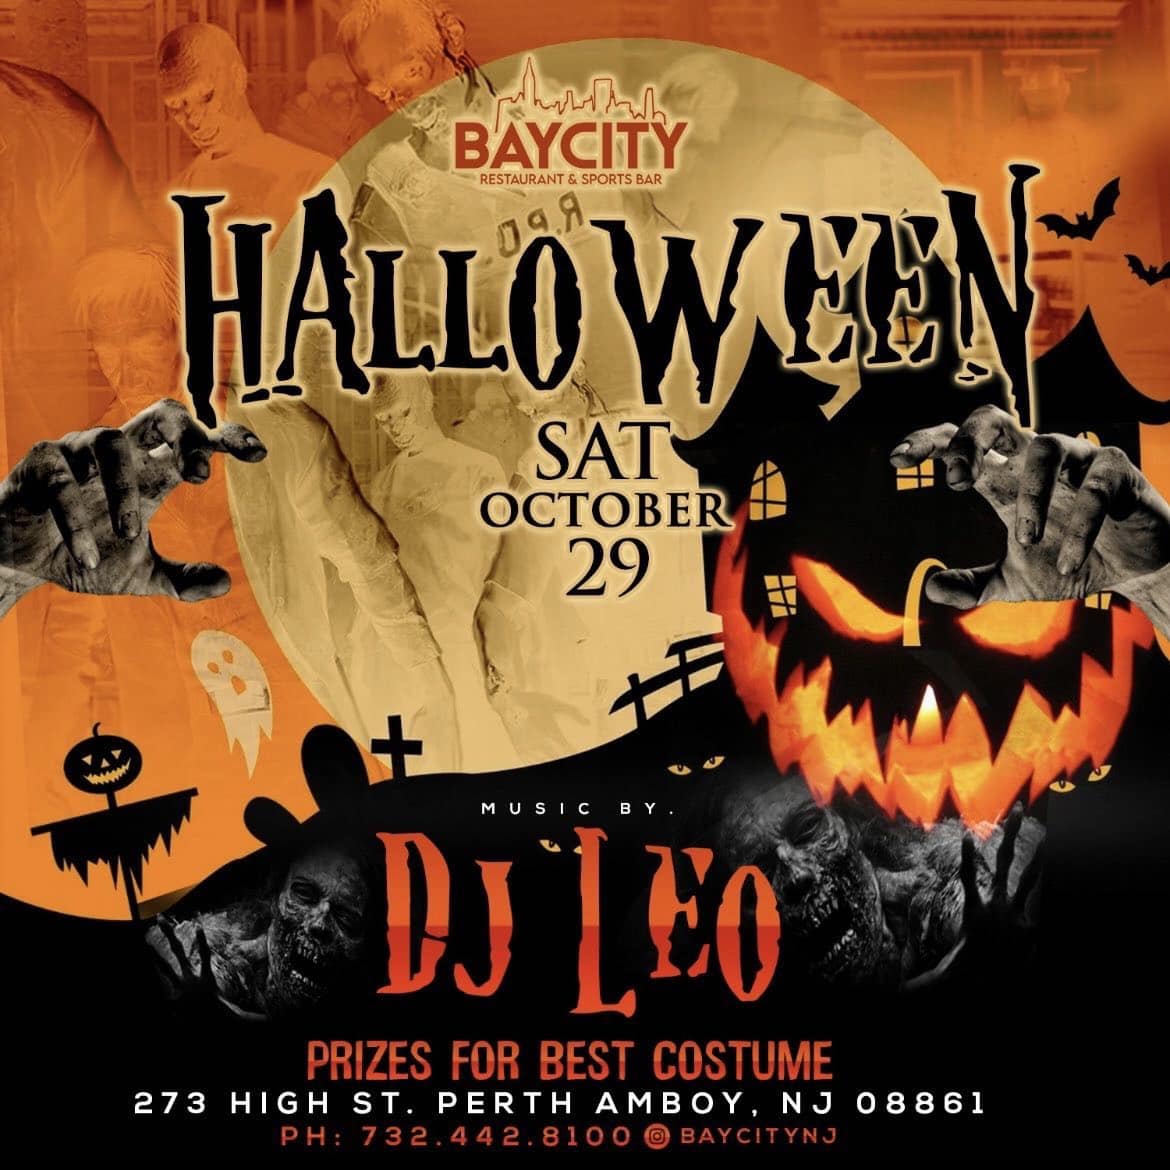 Halloween Party Perth Amboy Baycity Bar and Restaurant